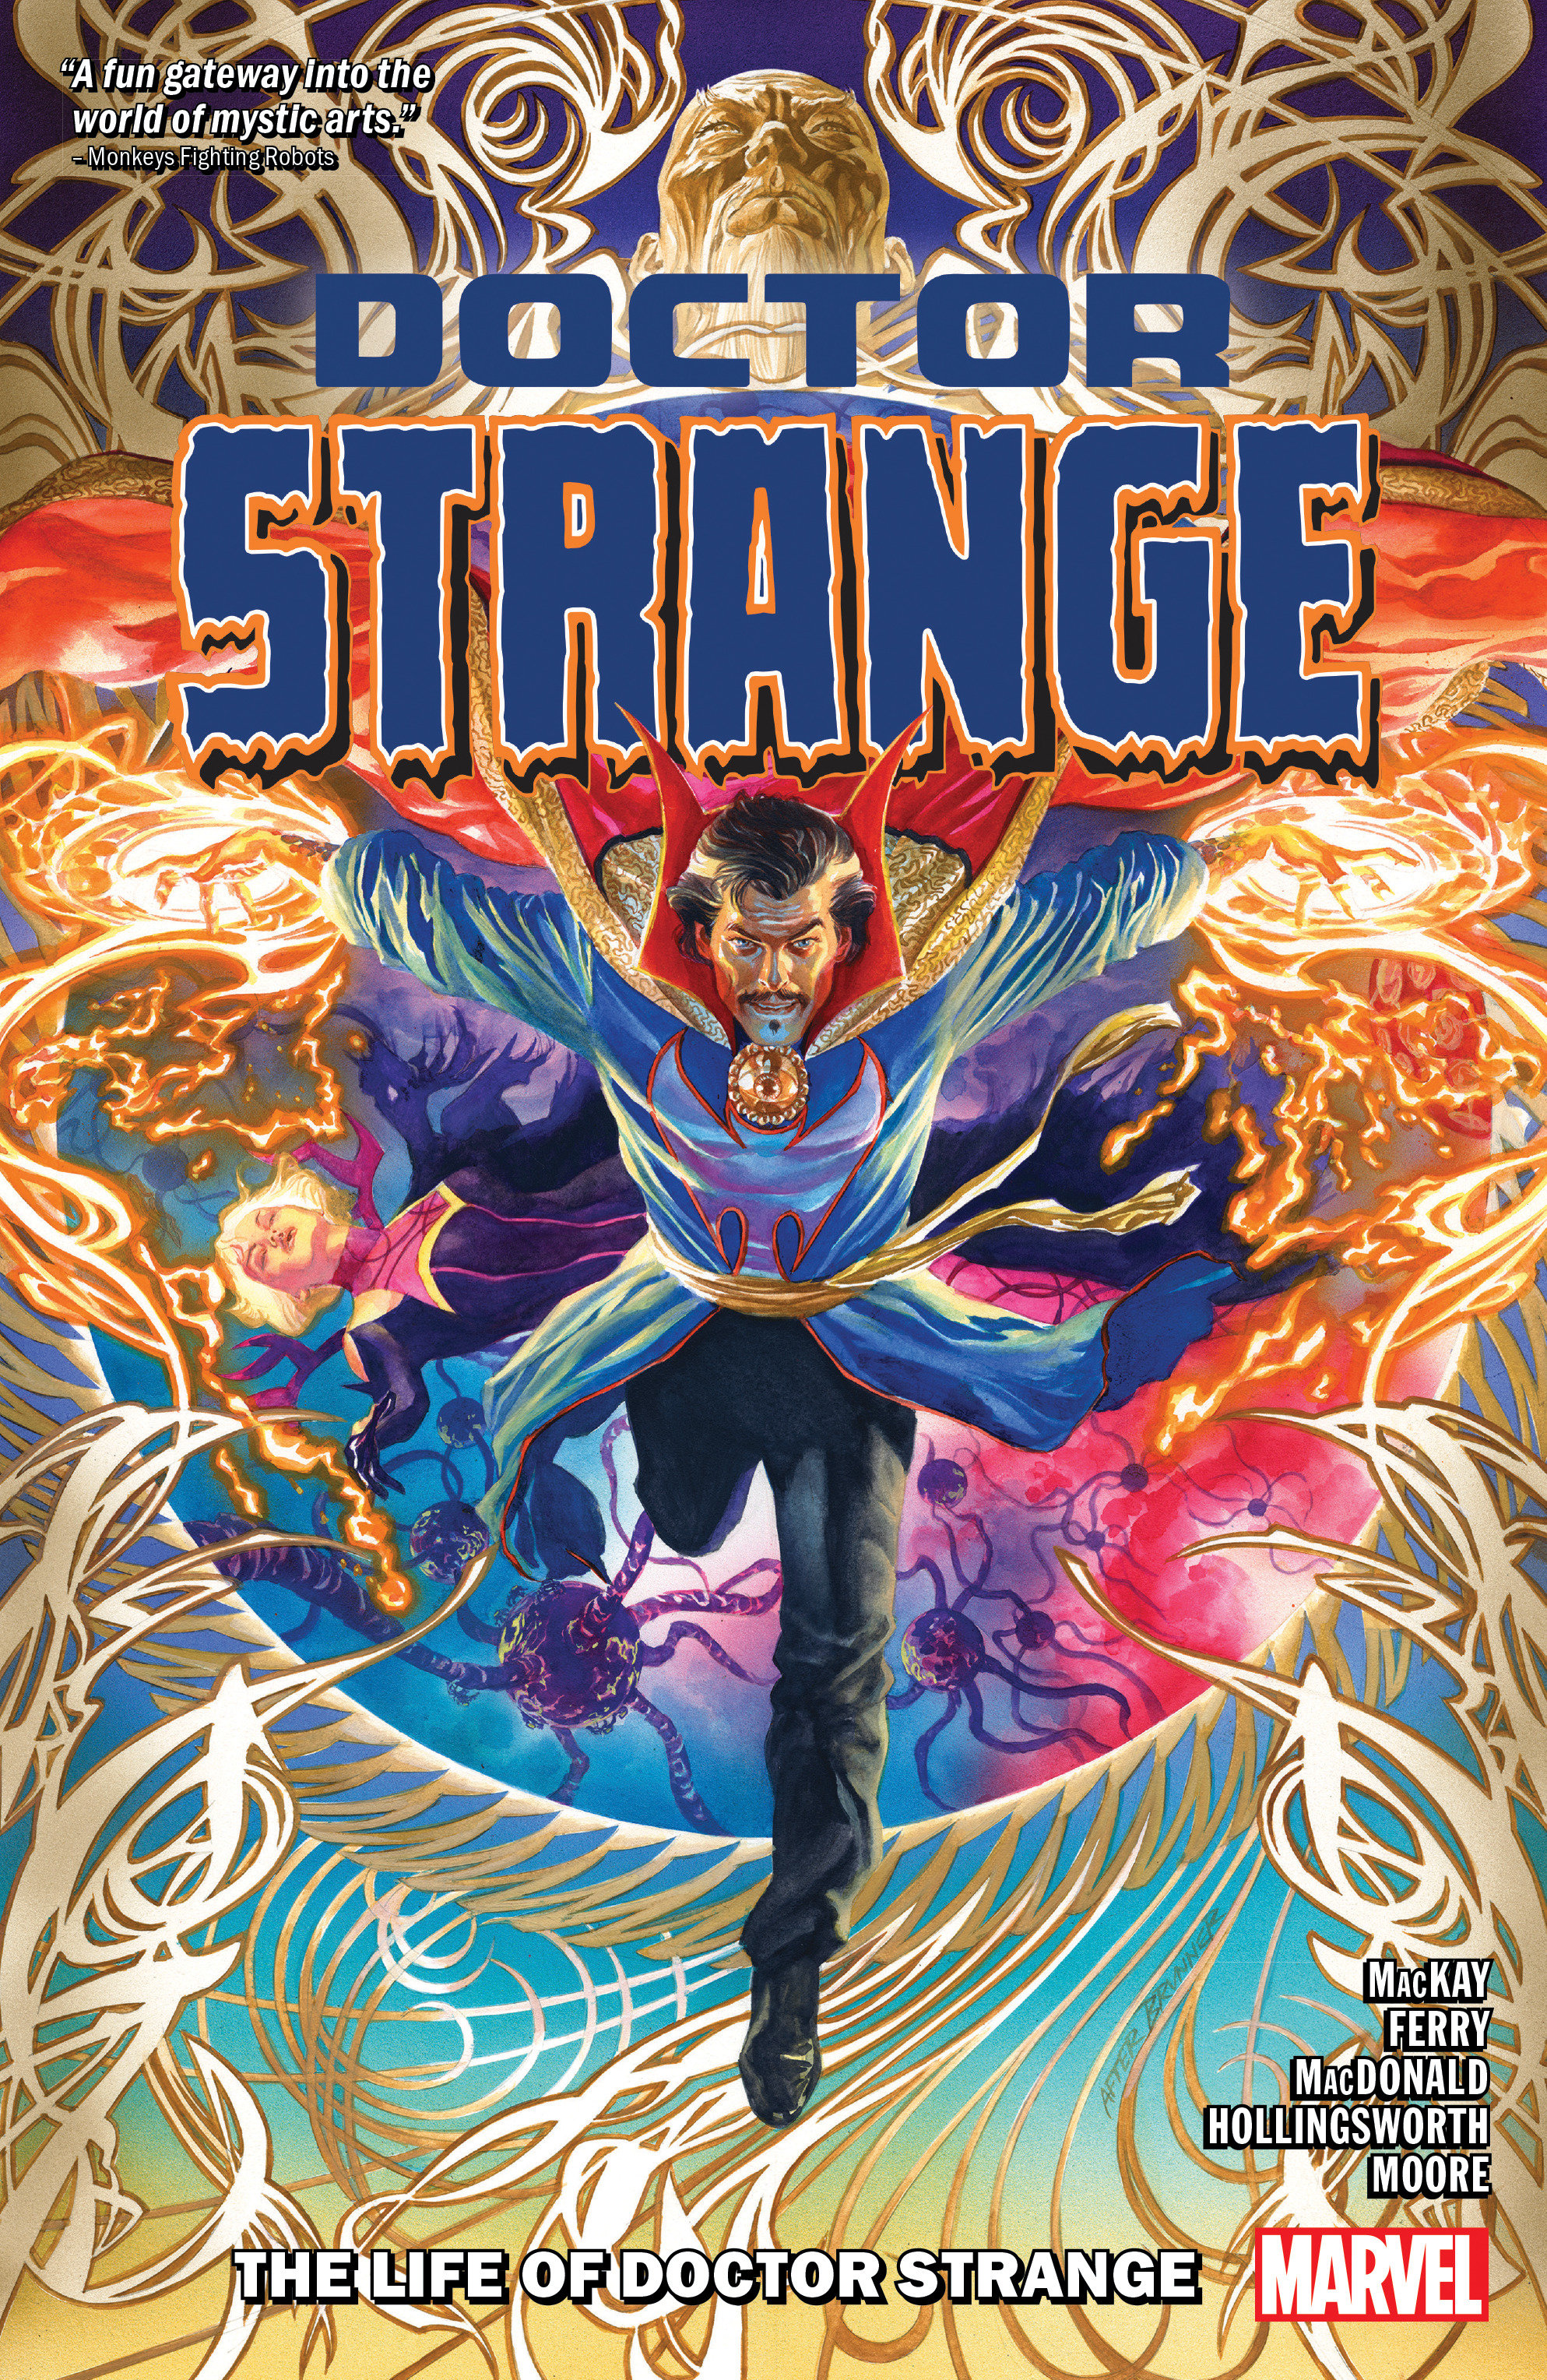 Doctor Strange by Jed Mackay Graphic Novel Volume 1 The Life of Doctor Strange